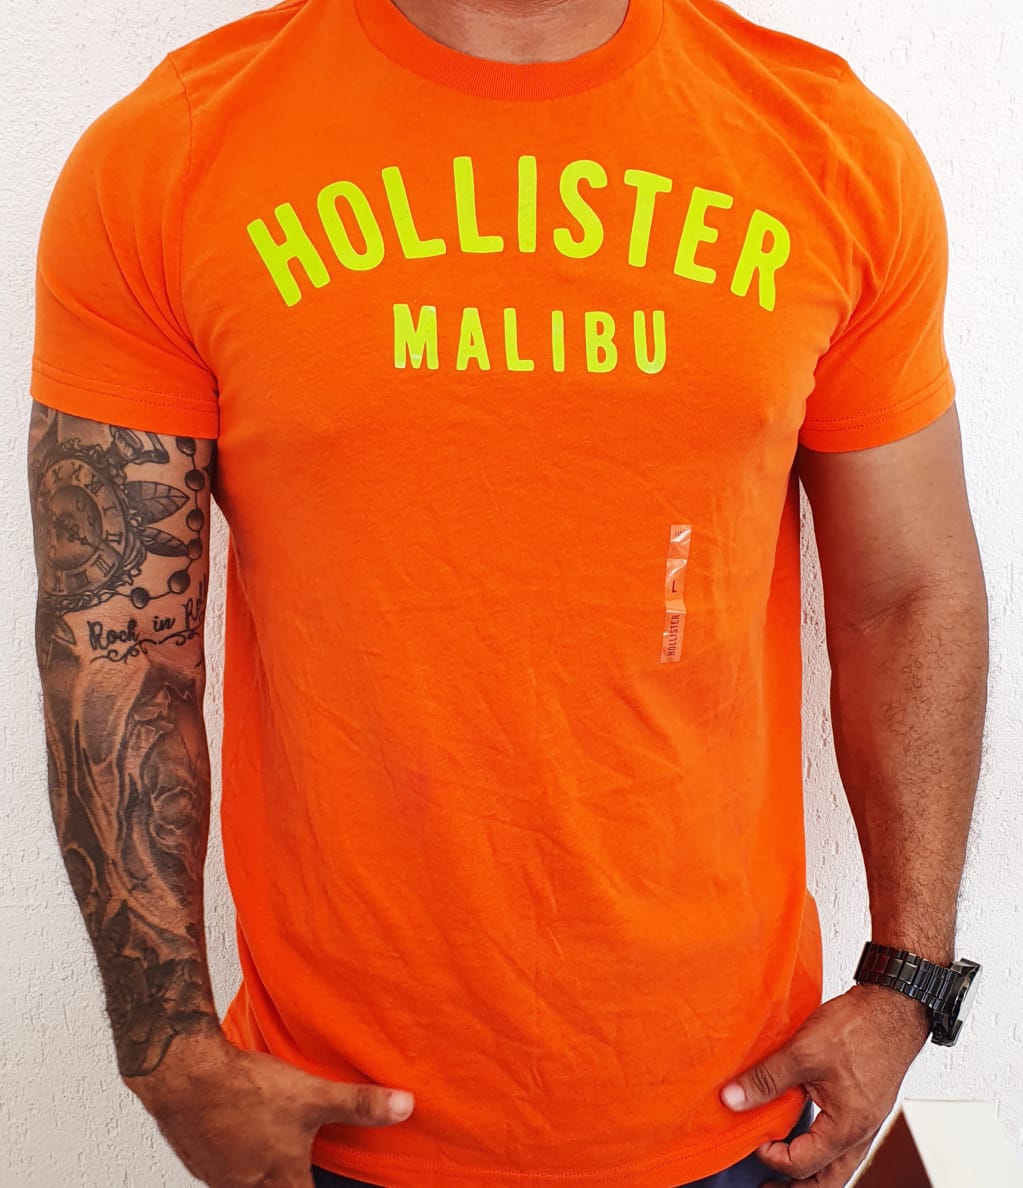 Zoom Camiseta Masculina Hollister Malibu